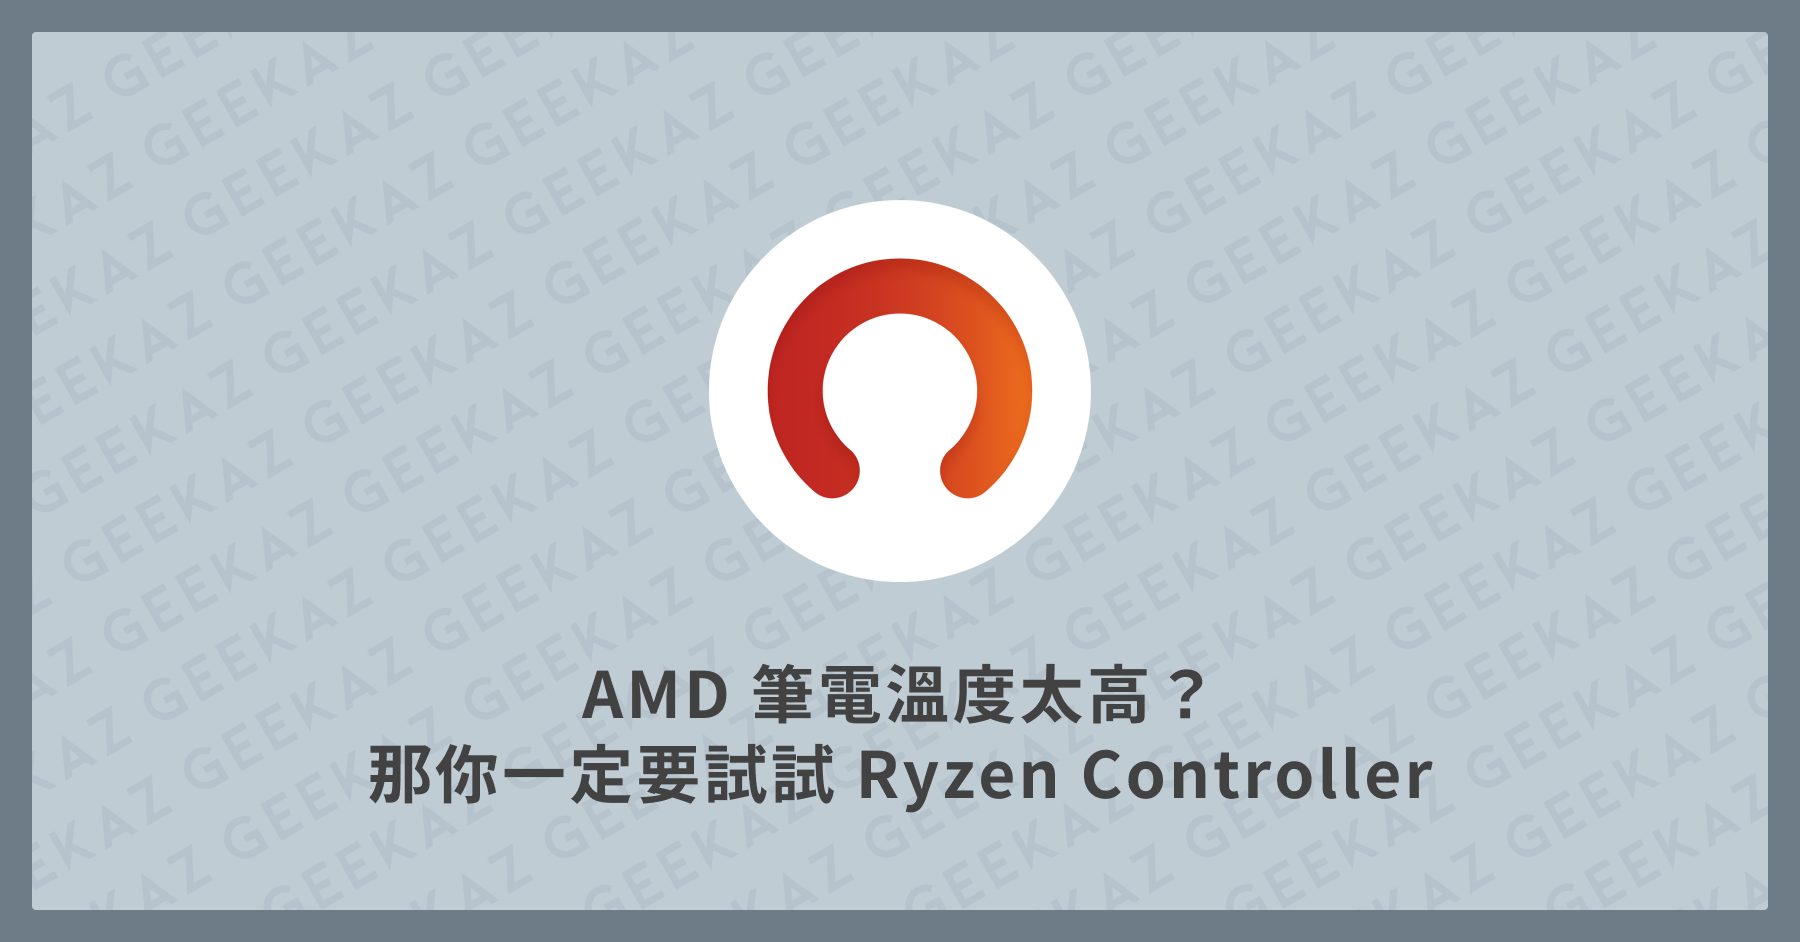 AMD 筆電溫度太高